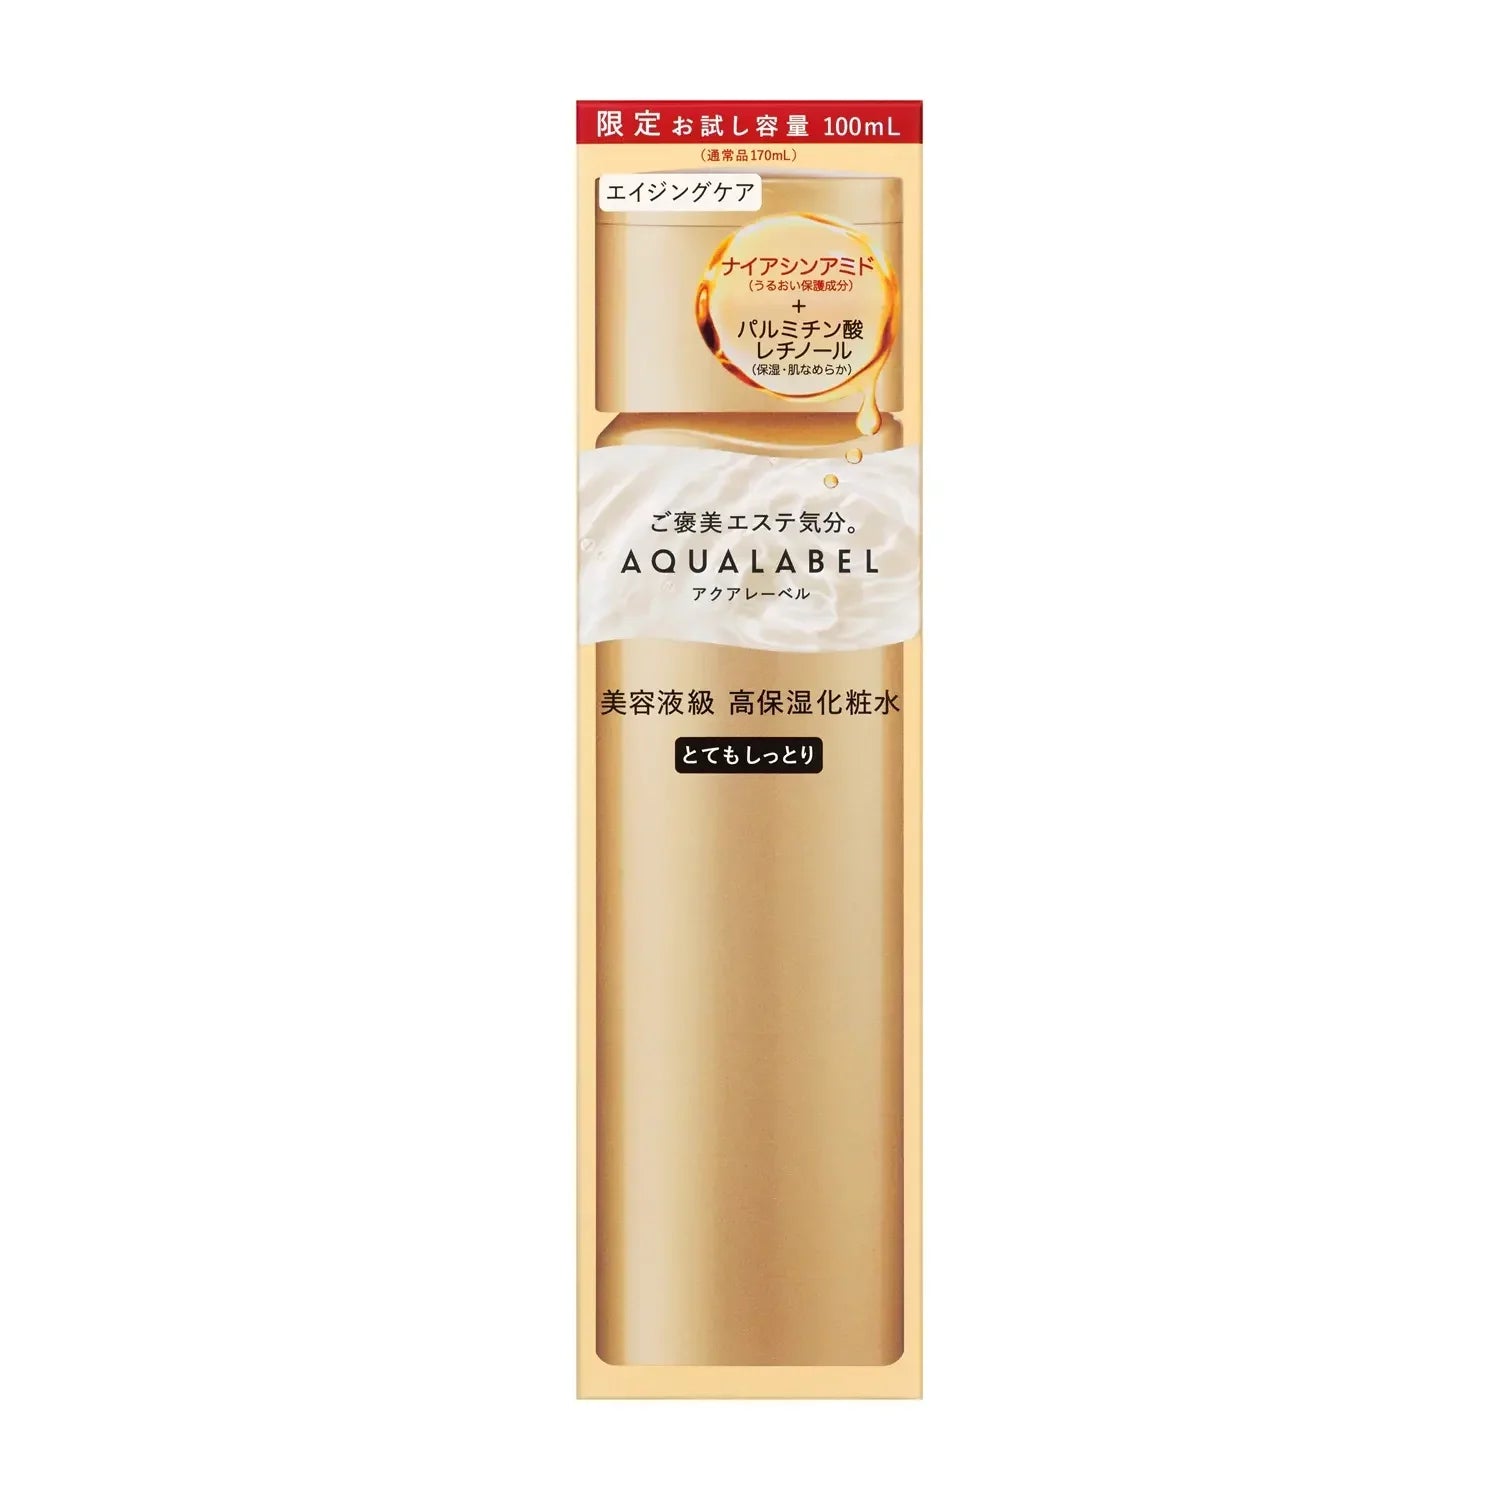 Shiseido Aqualabel Antiaging Oil In Treatment Lotion Rich Moist 170ml